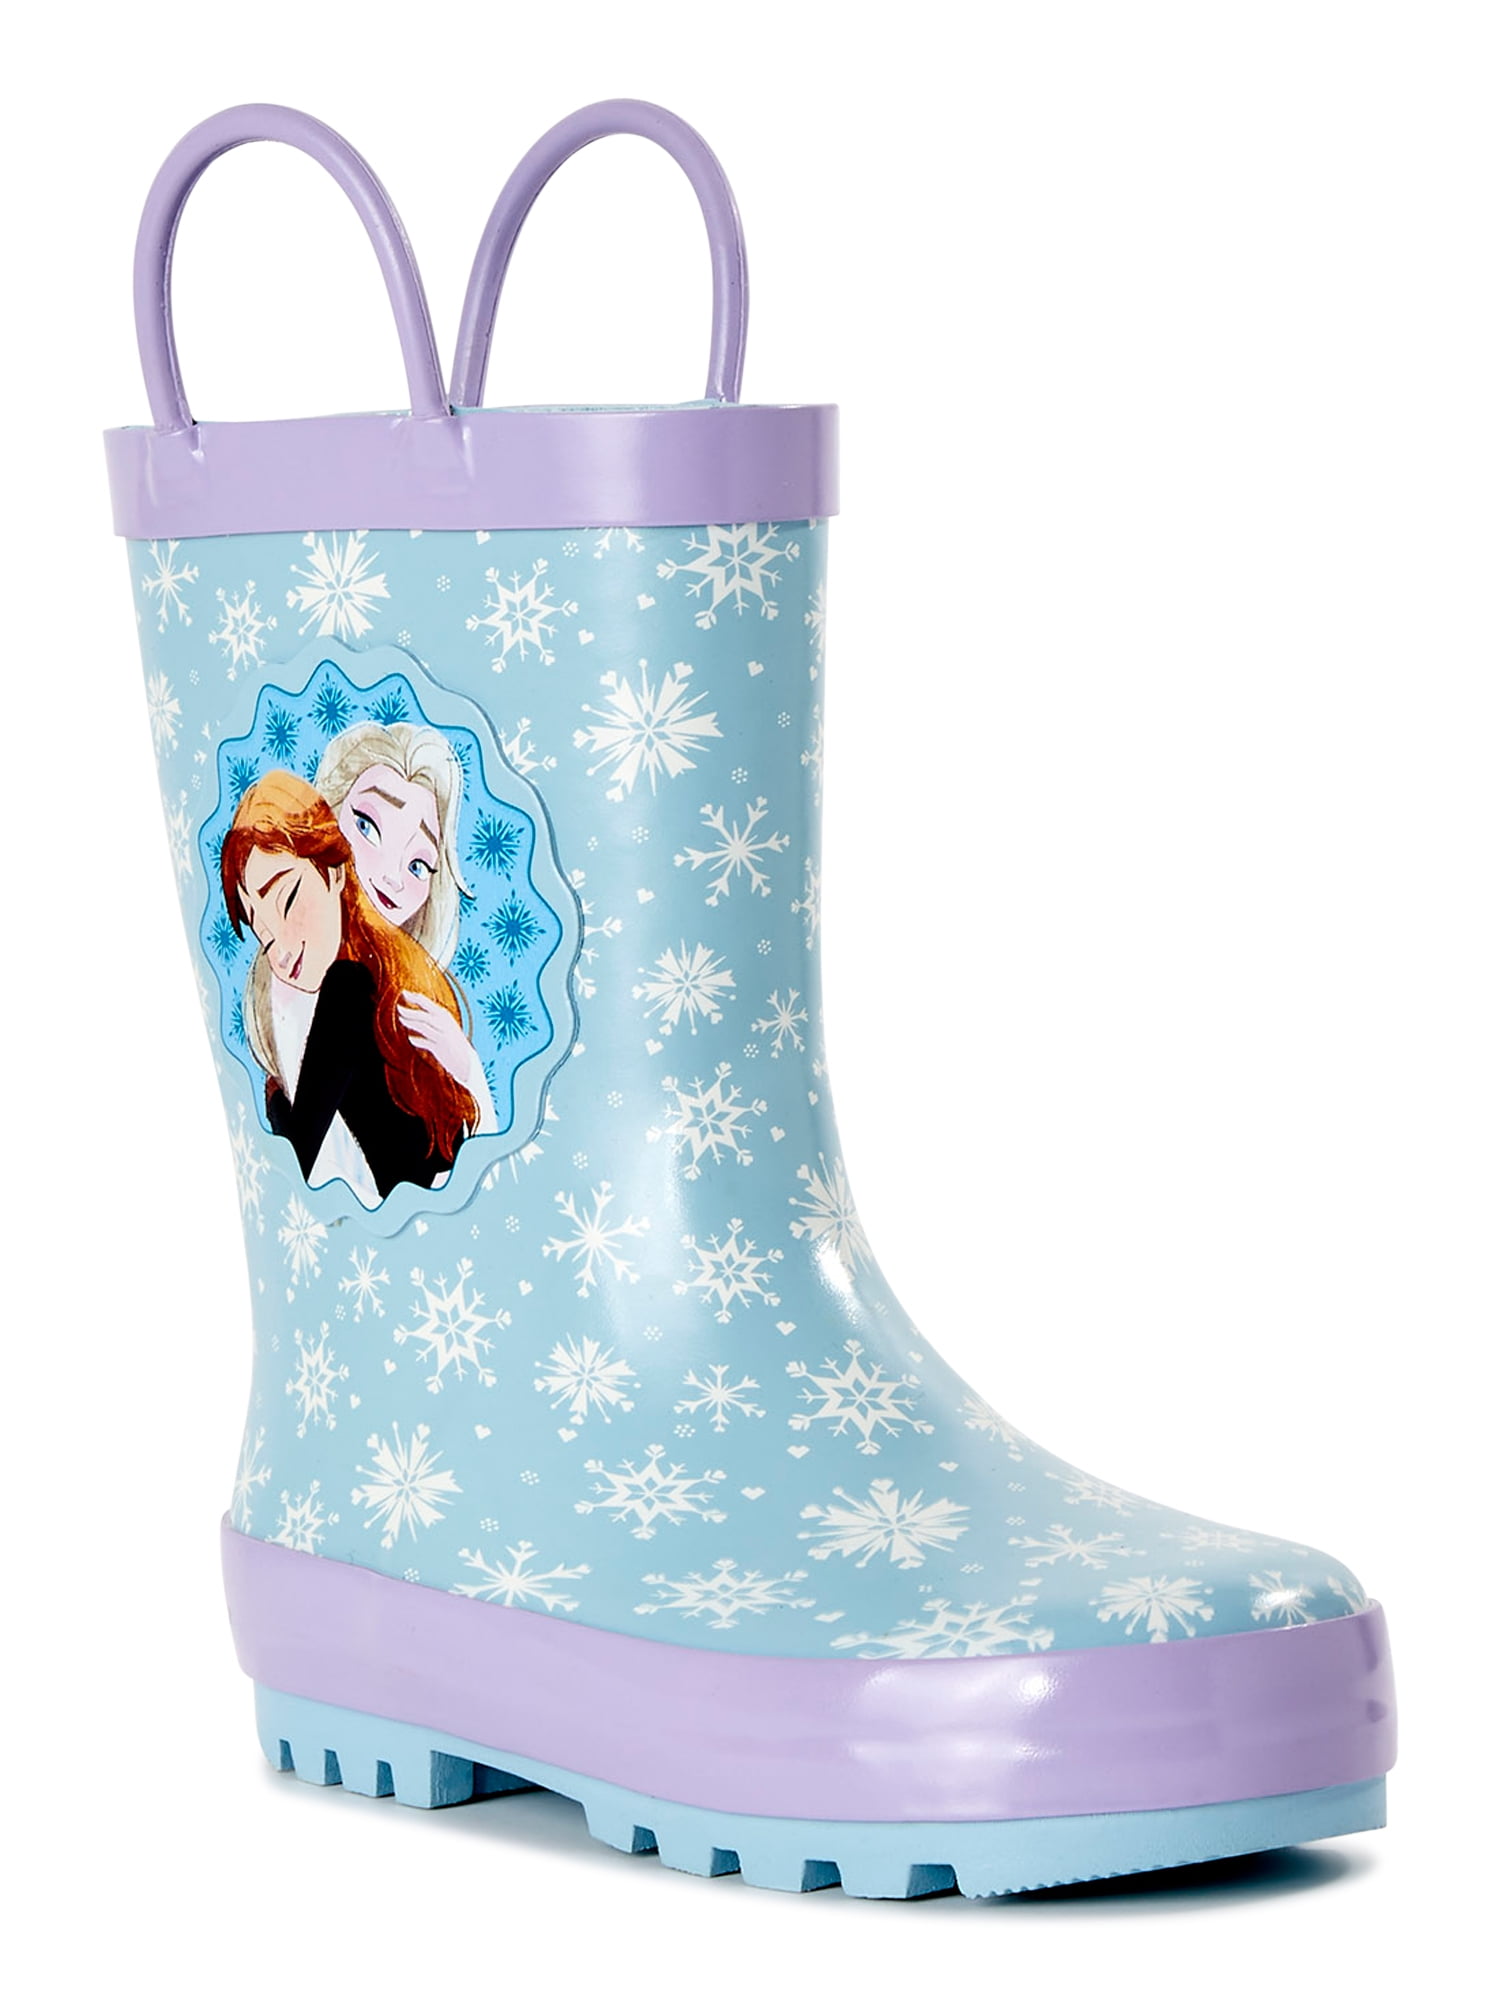 Disney Frozen Girls' Rain Boots (Size 5/6 to 13/1) $15 + Free Shipping w/ Walmart+ or on $35+